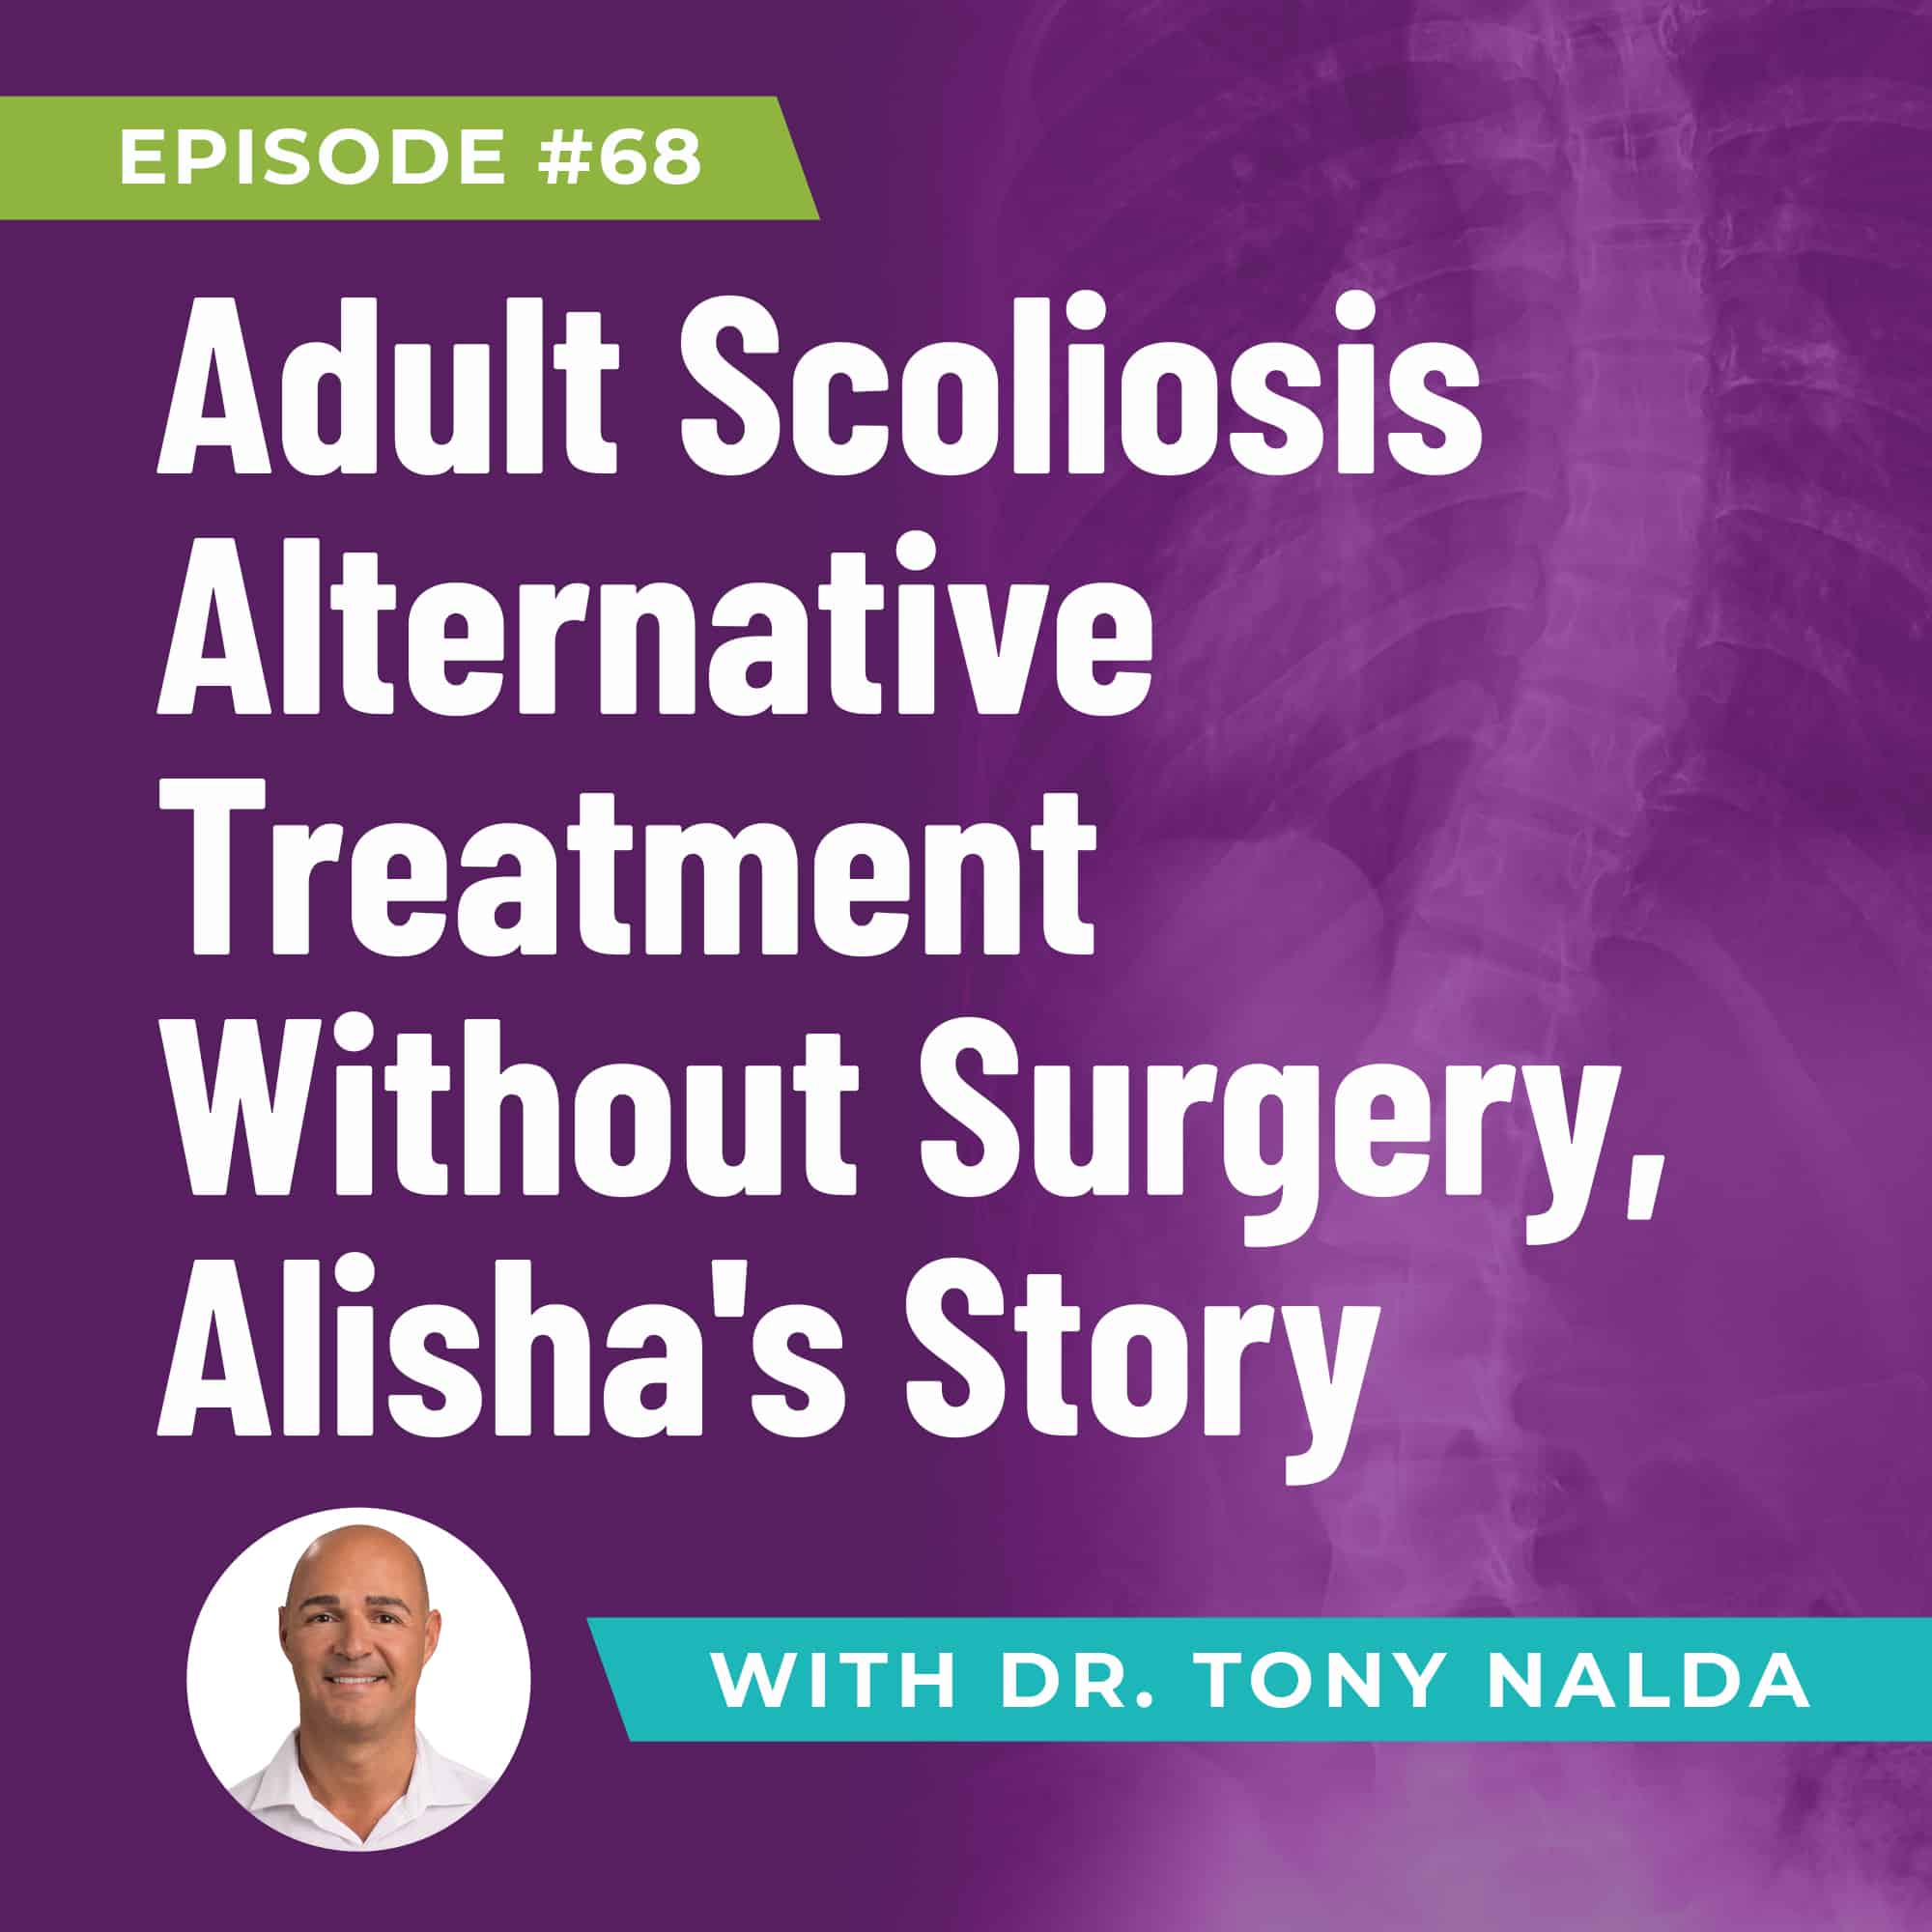 Adult Scoliosis Alternative Treatment Without Surgery, Alisha's Story